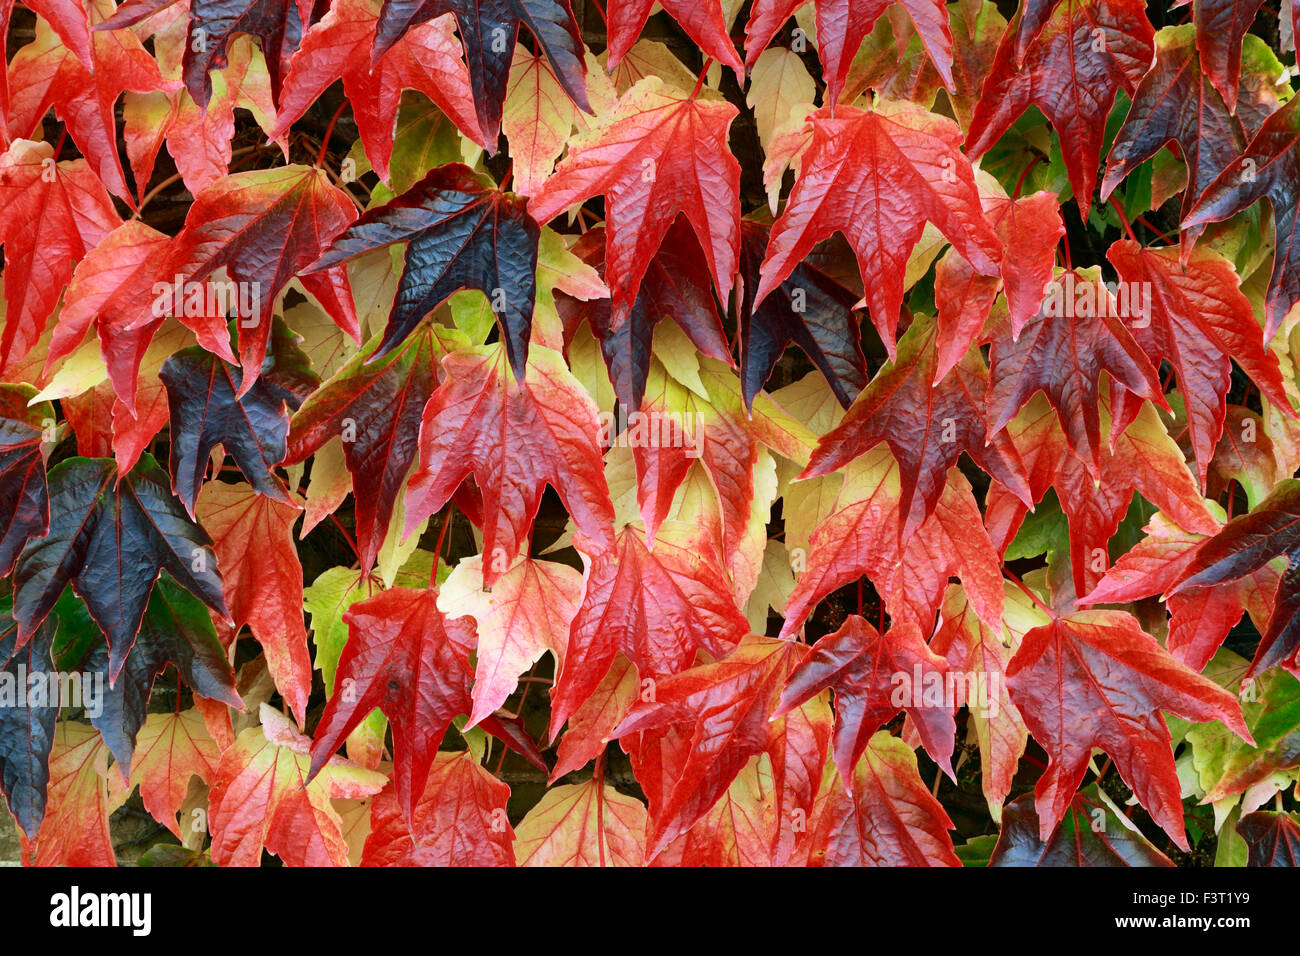 Parthenocissus tricuspidata, Boston Ivy, red autumn autumnal leaves foliage wall climber climbing plant Stock Photo